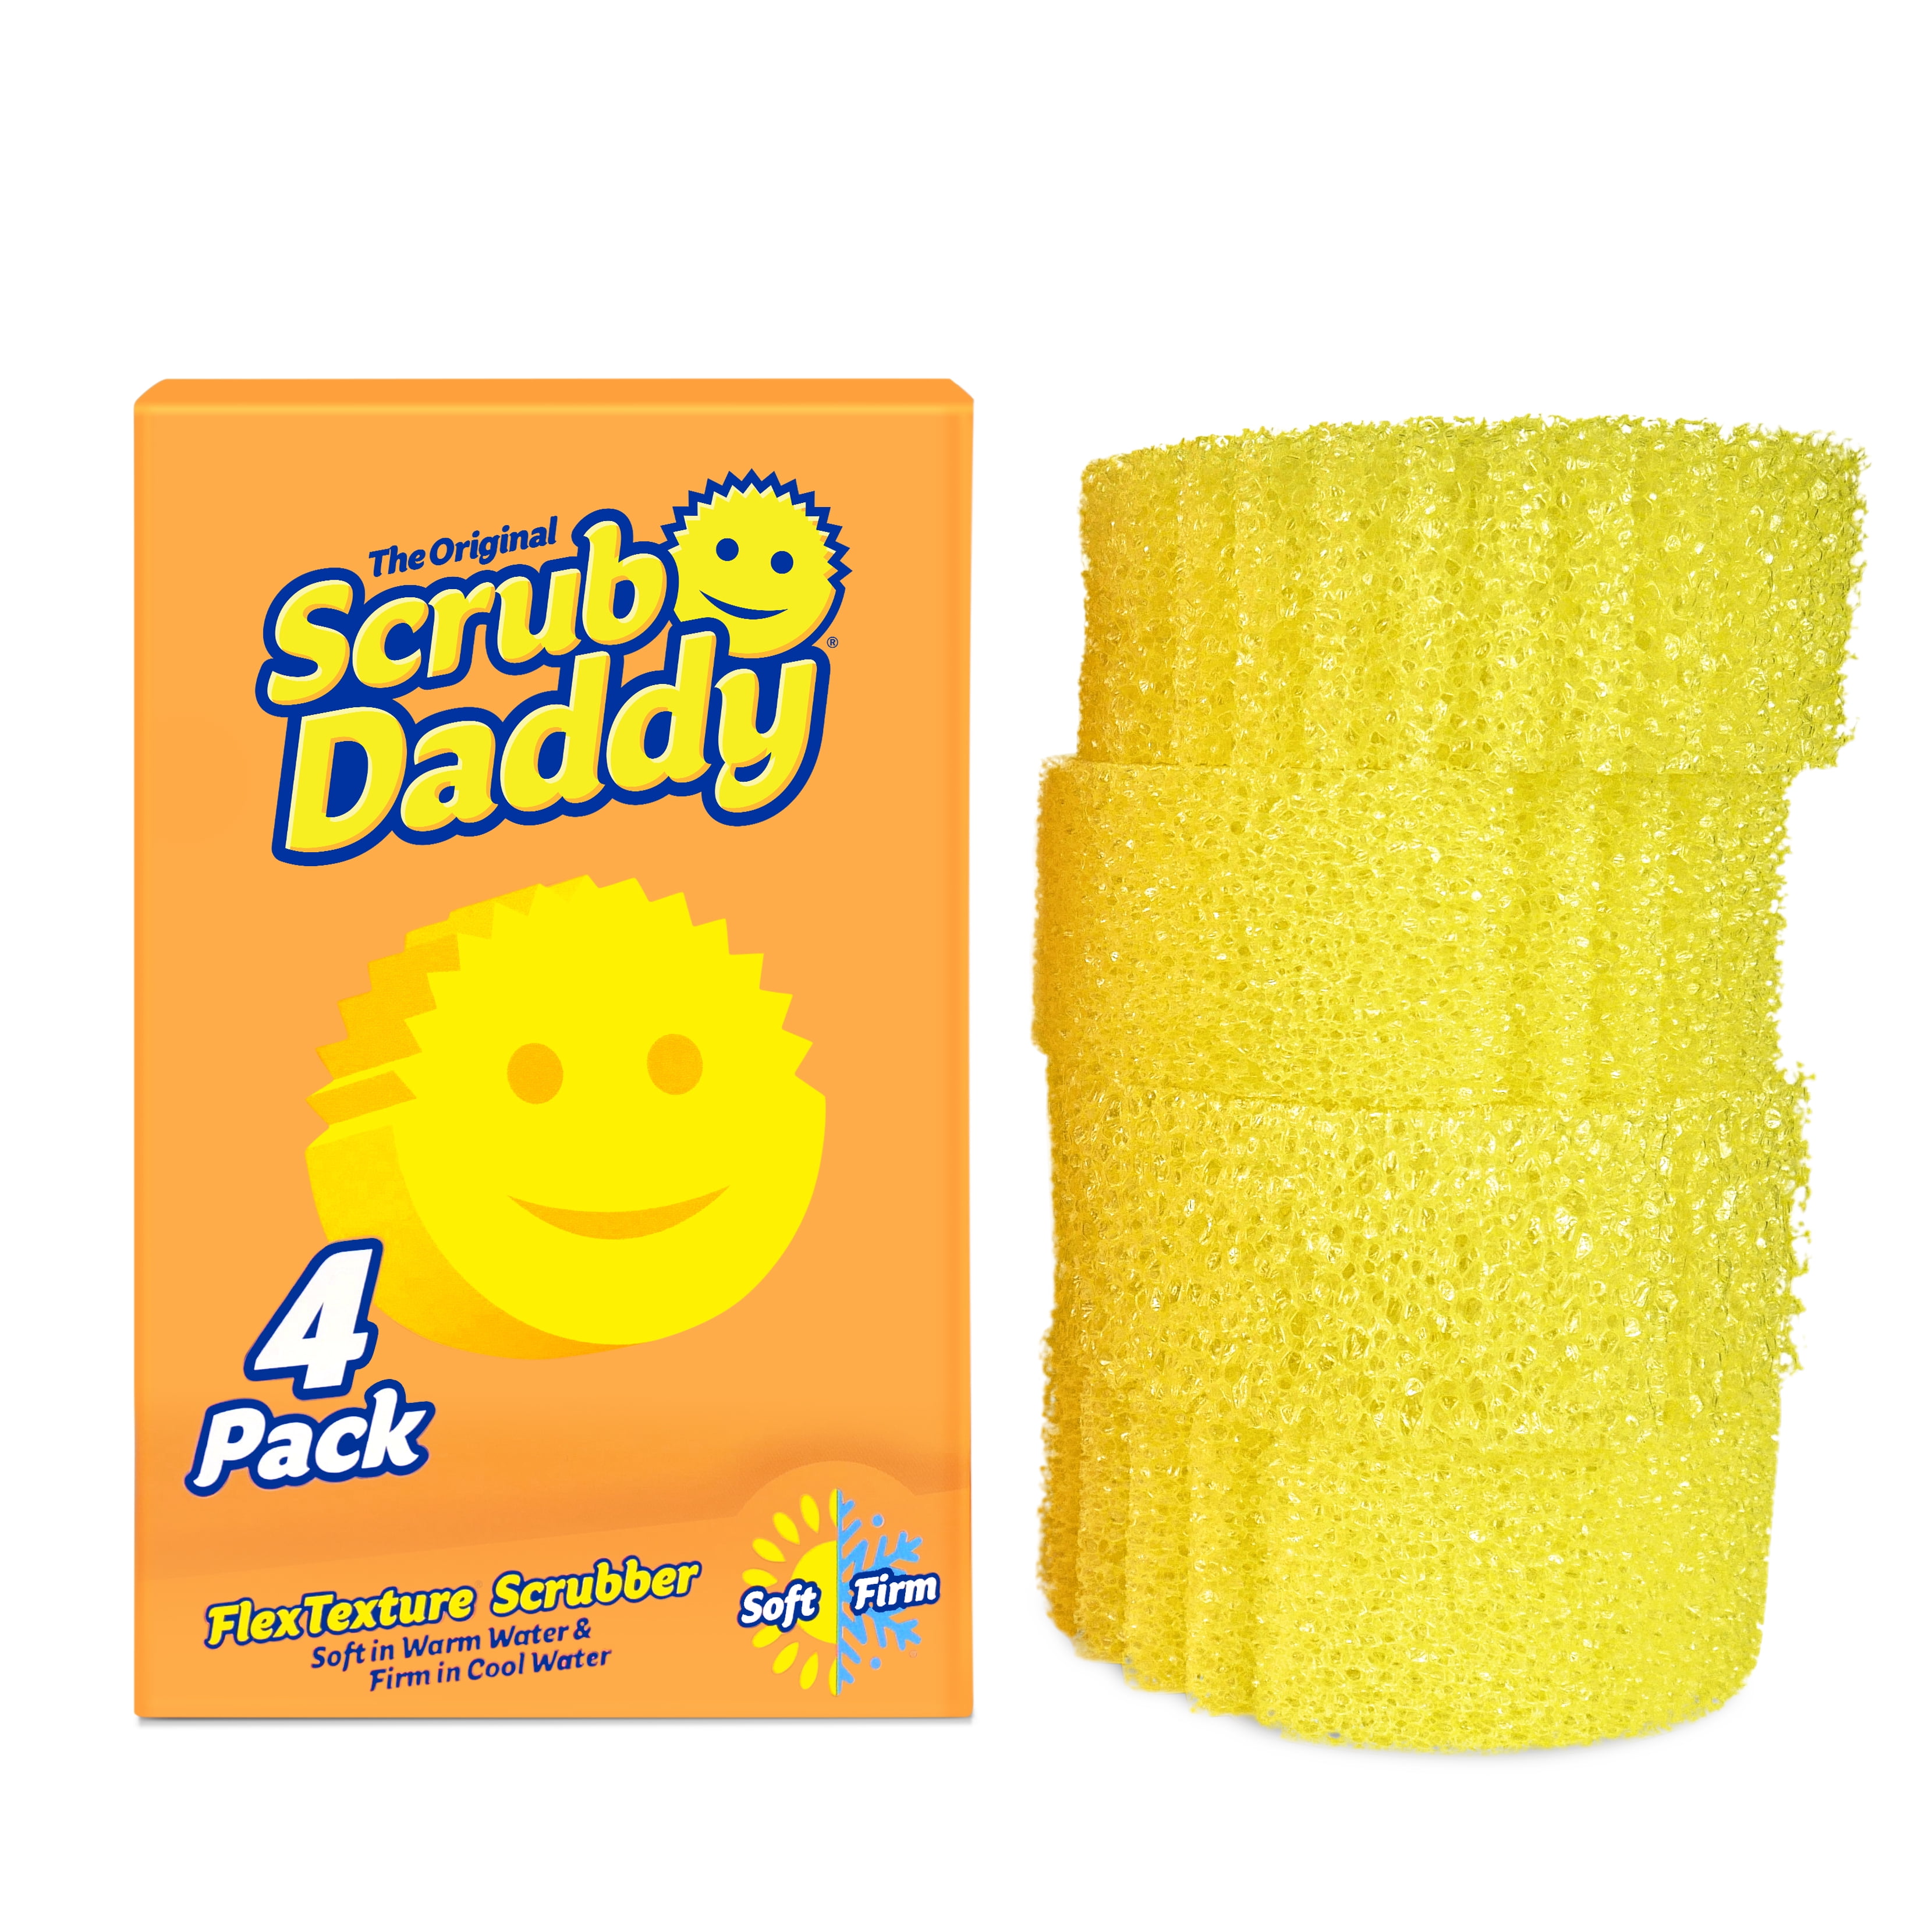 What Is a Scrub Daddy Sponge?